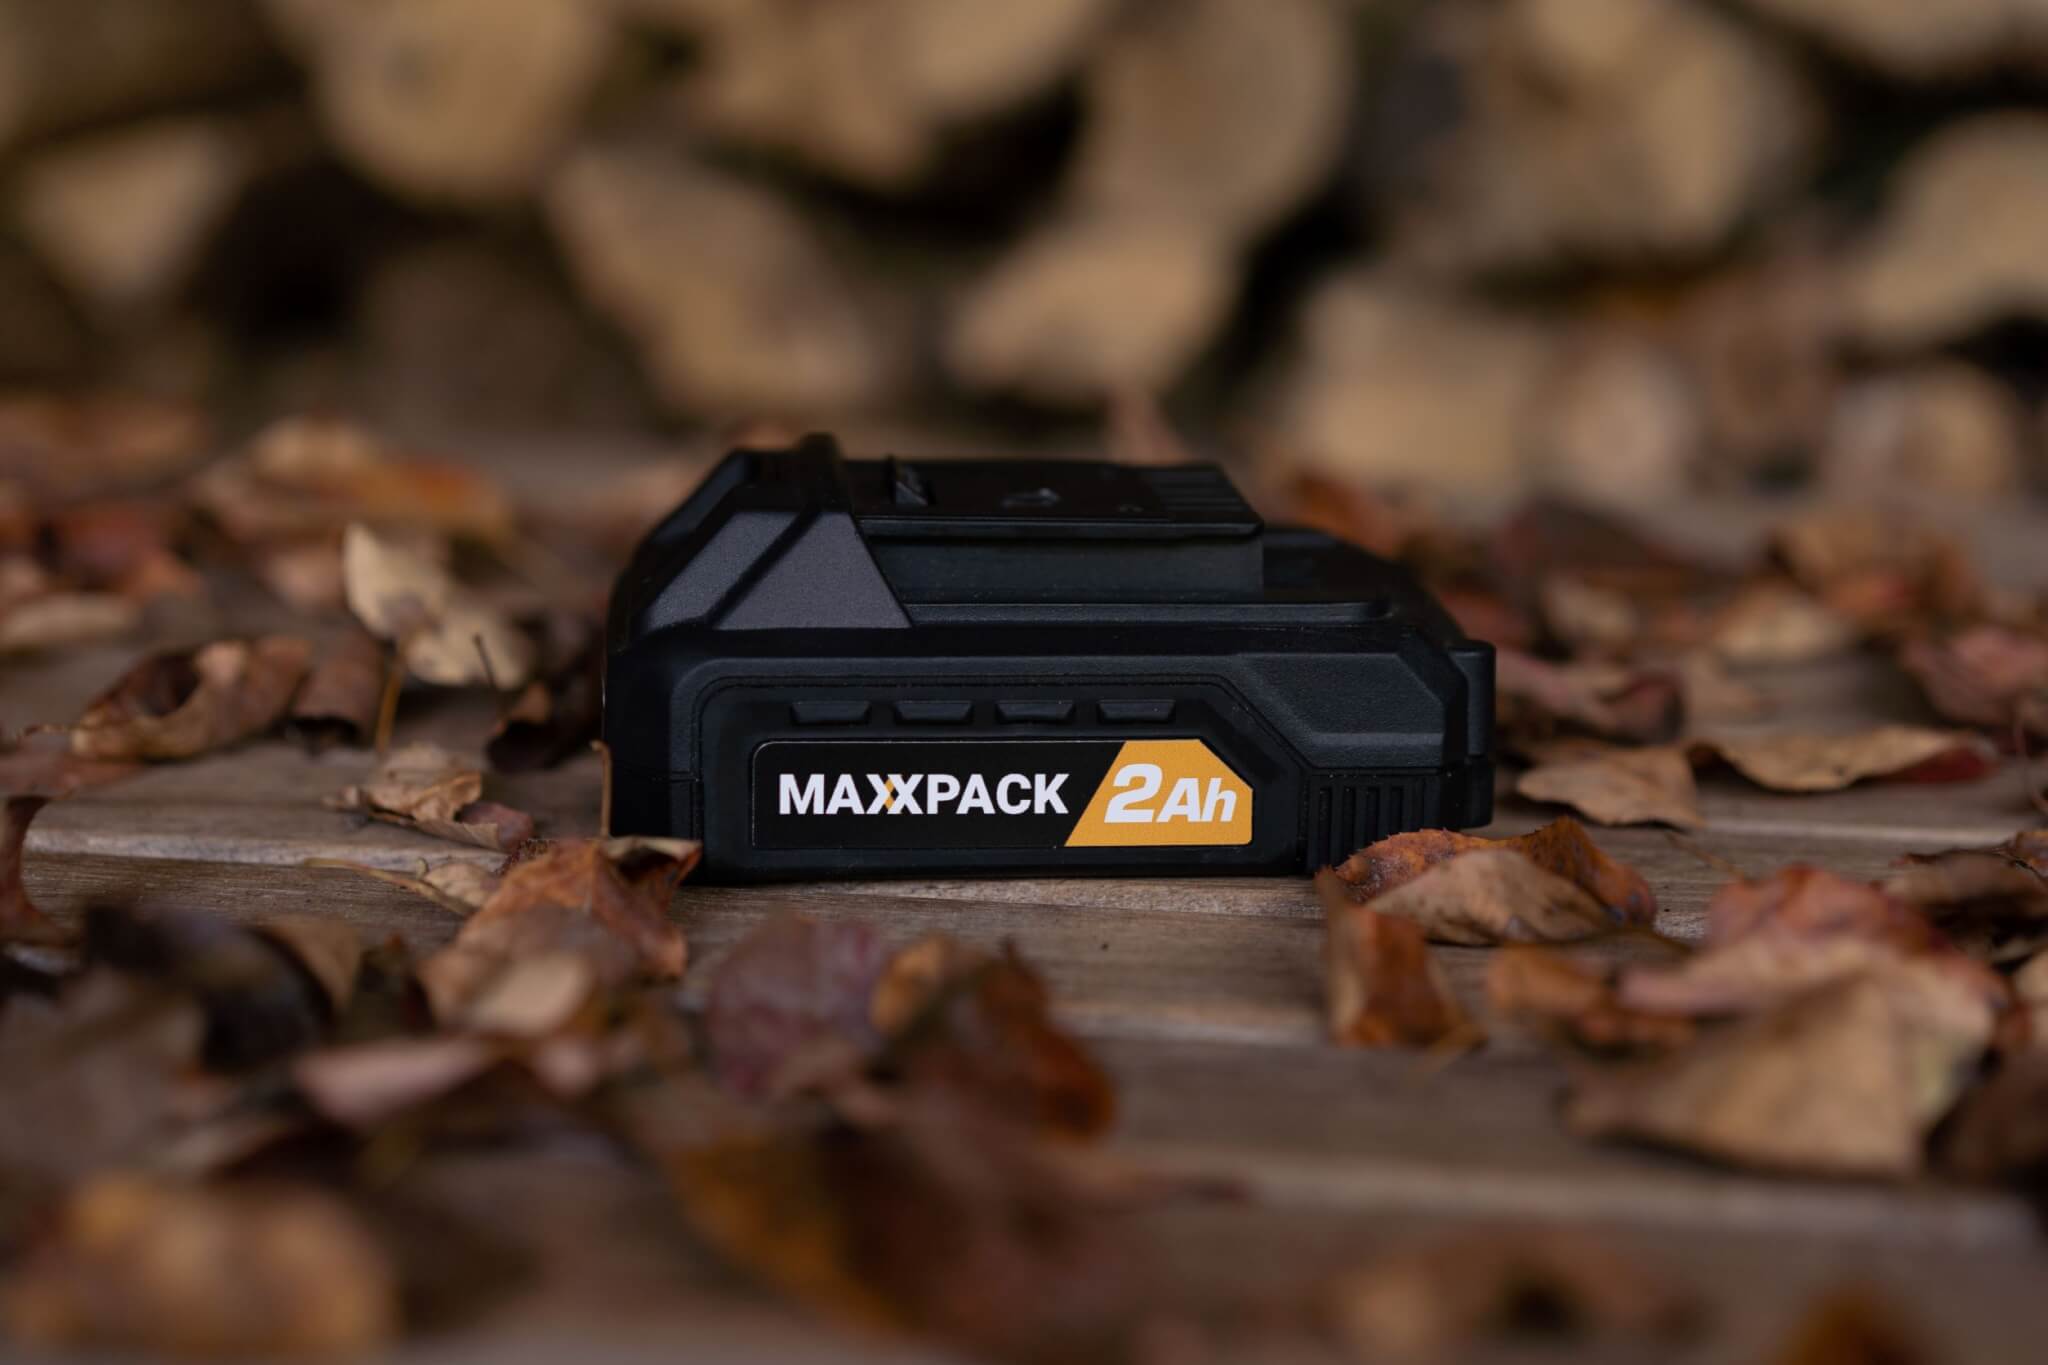 2.0Ah battery powertools | Maxxpack collection | Batavia